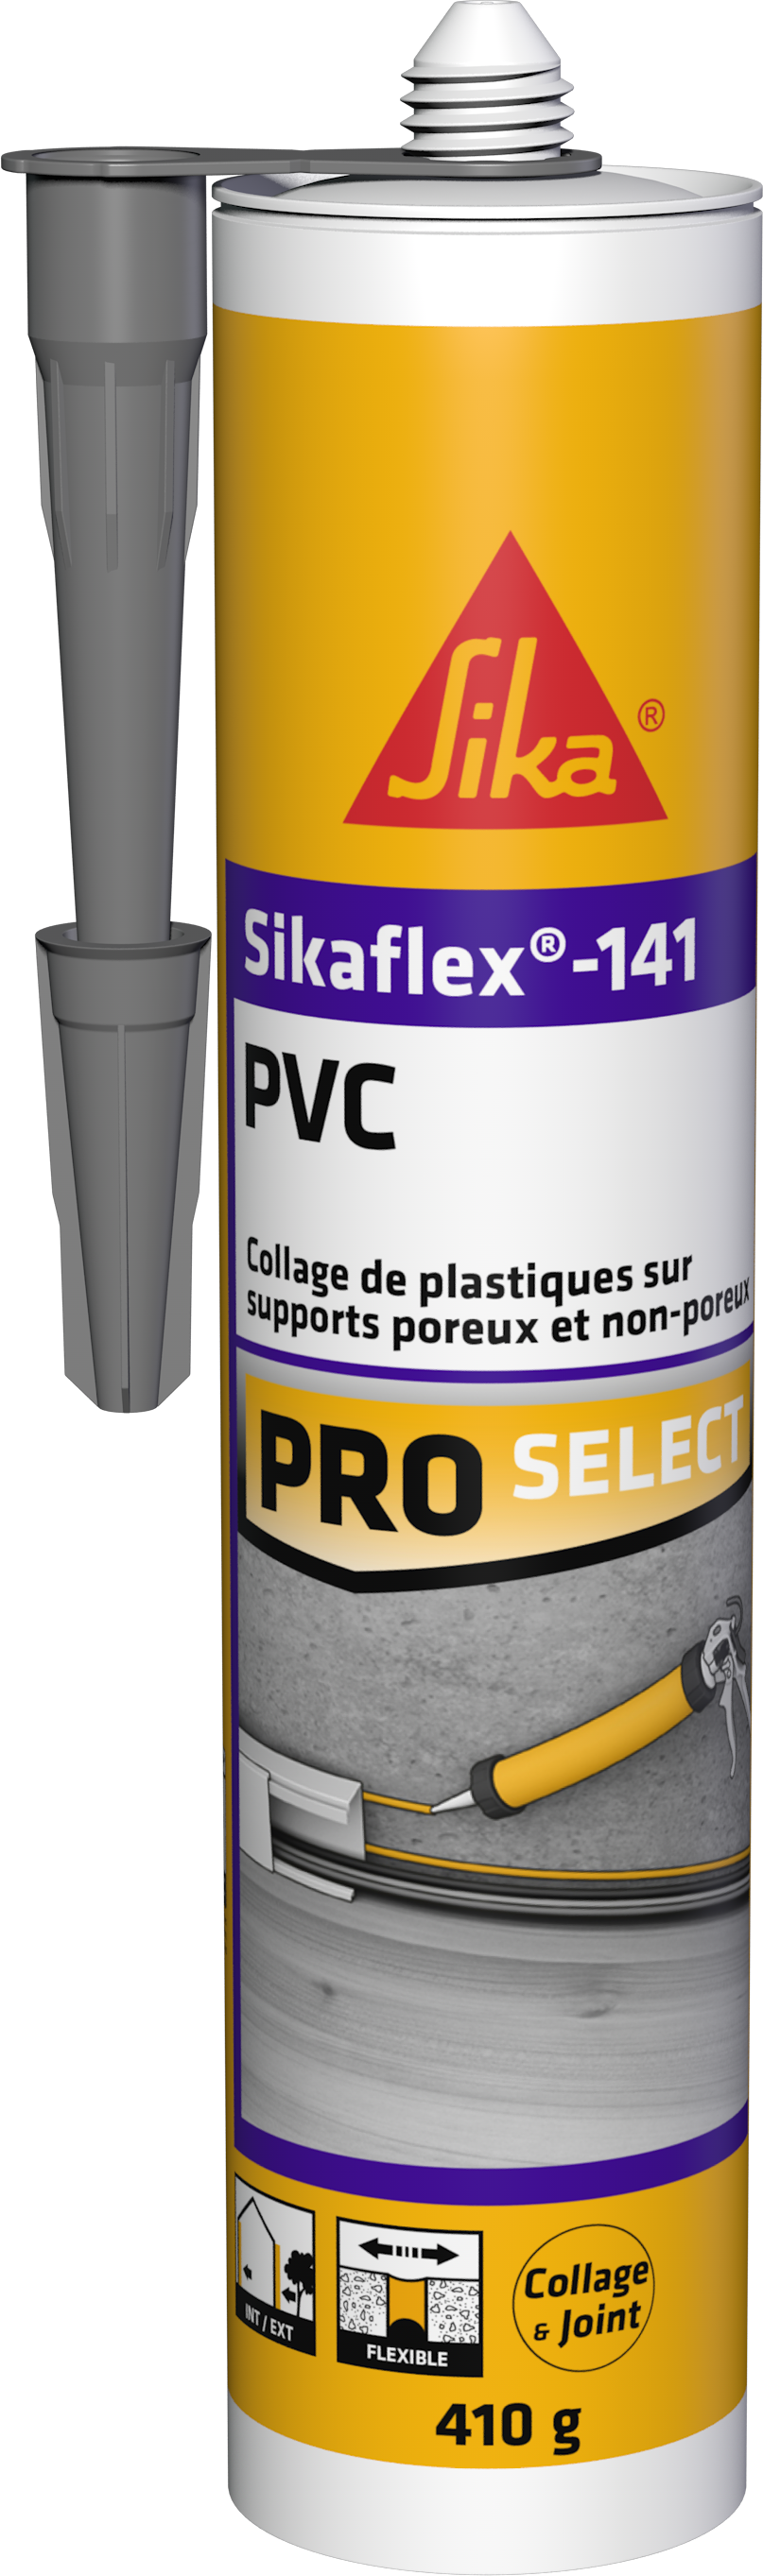 Colle Sikaflex®-141 PVC Gris 410gr - SIKA